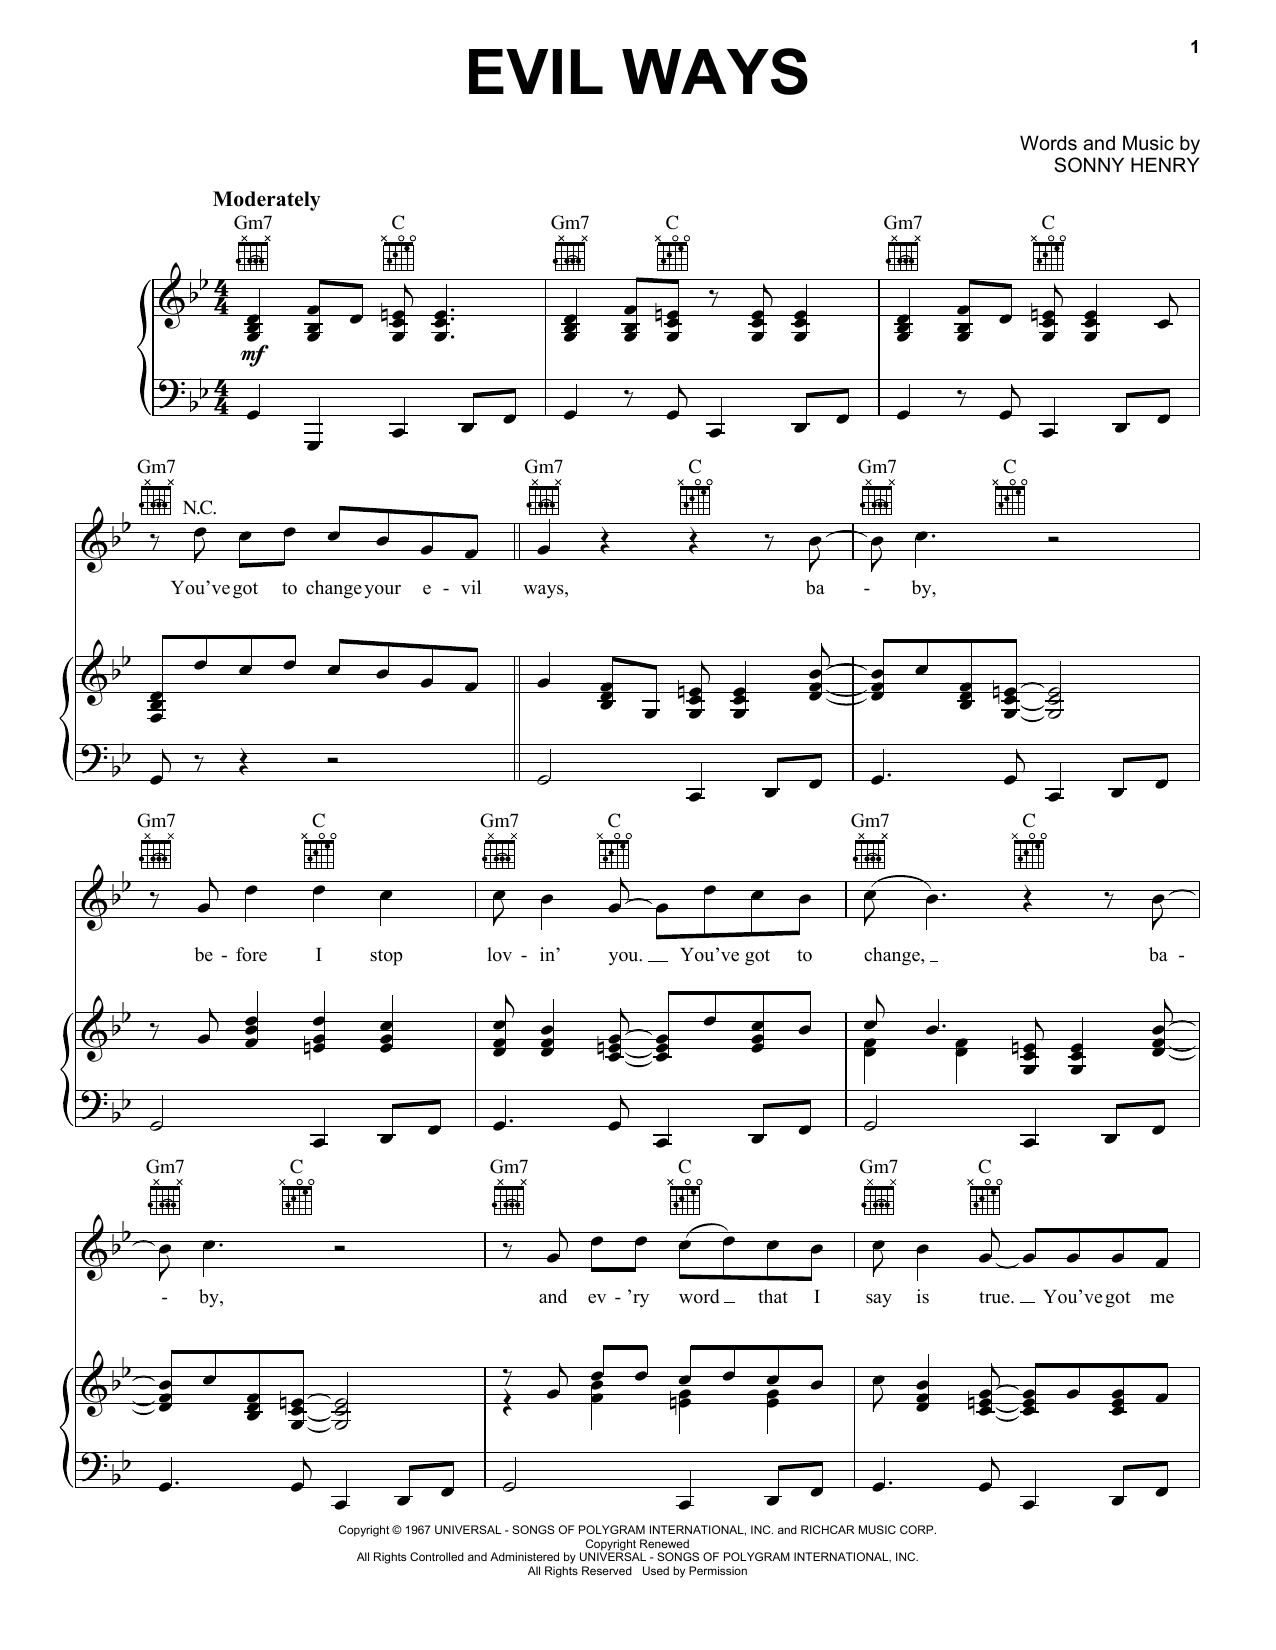 Santana Evil Ways Sheet Music Notes & Chords for Real Book – Melody & Chords - Download or Print PDF